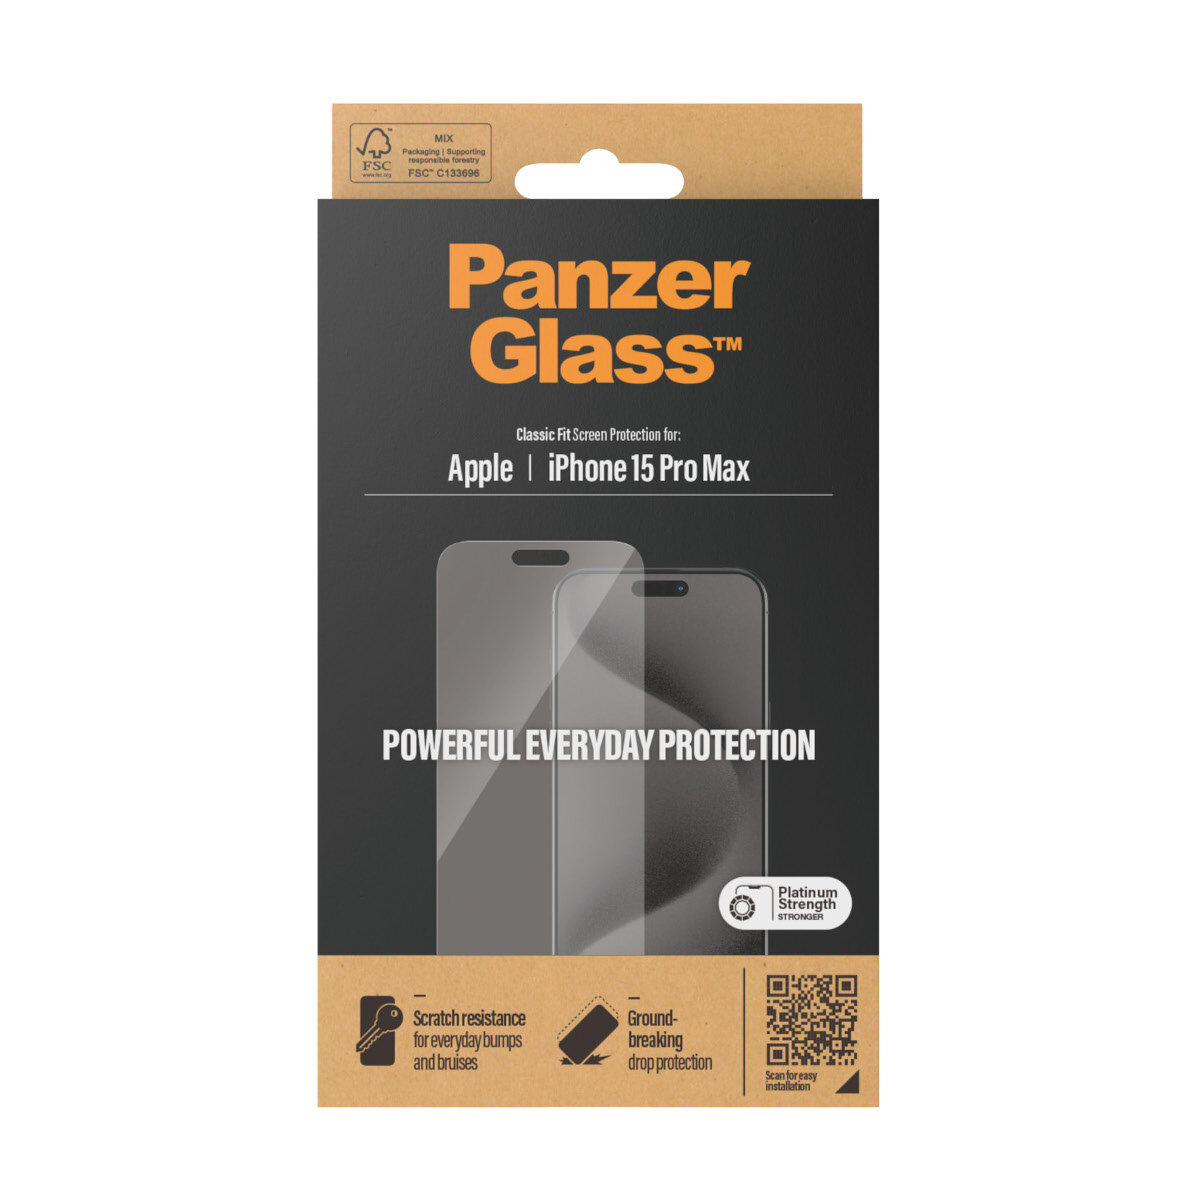 Szkło hartowane PanzerGlass Classic Fit iPhone15 Pro Max opakowanie frontem